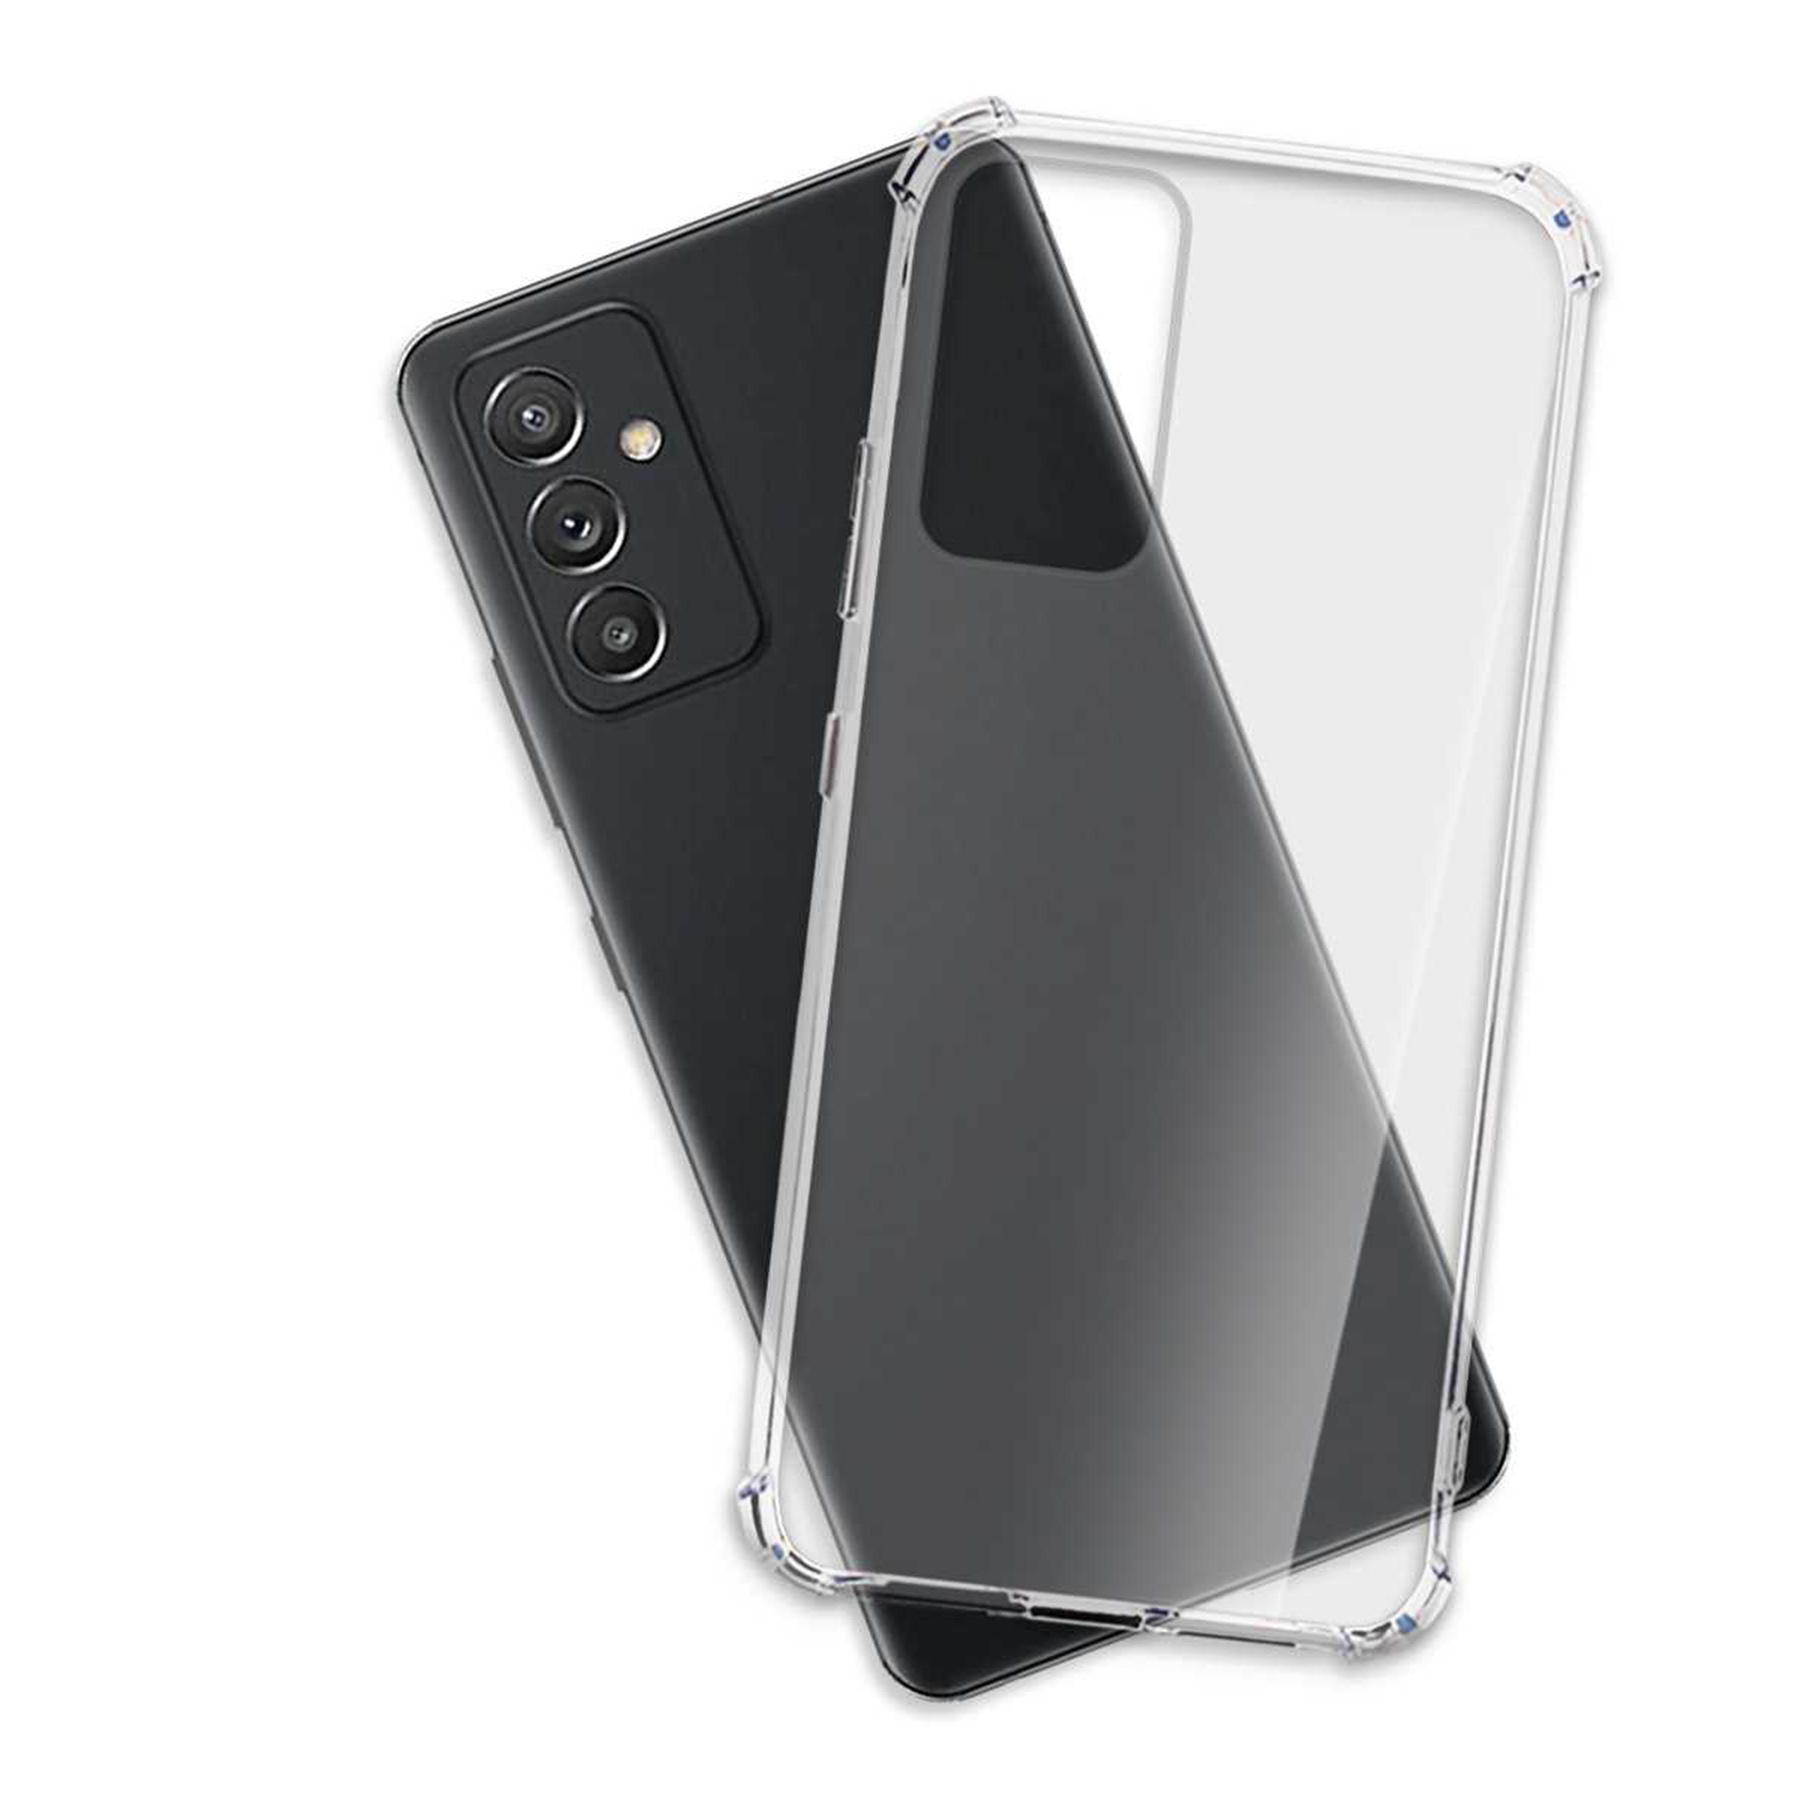 Backcover, Clear MORE ENERGY Transparent MTB Galaxy 5G, Armor A82 Samsung, Case,